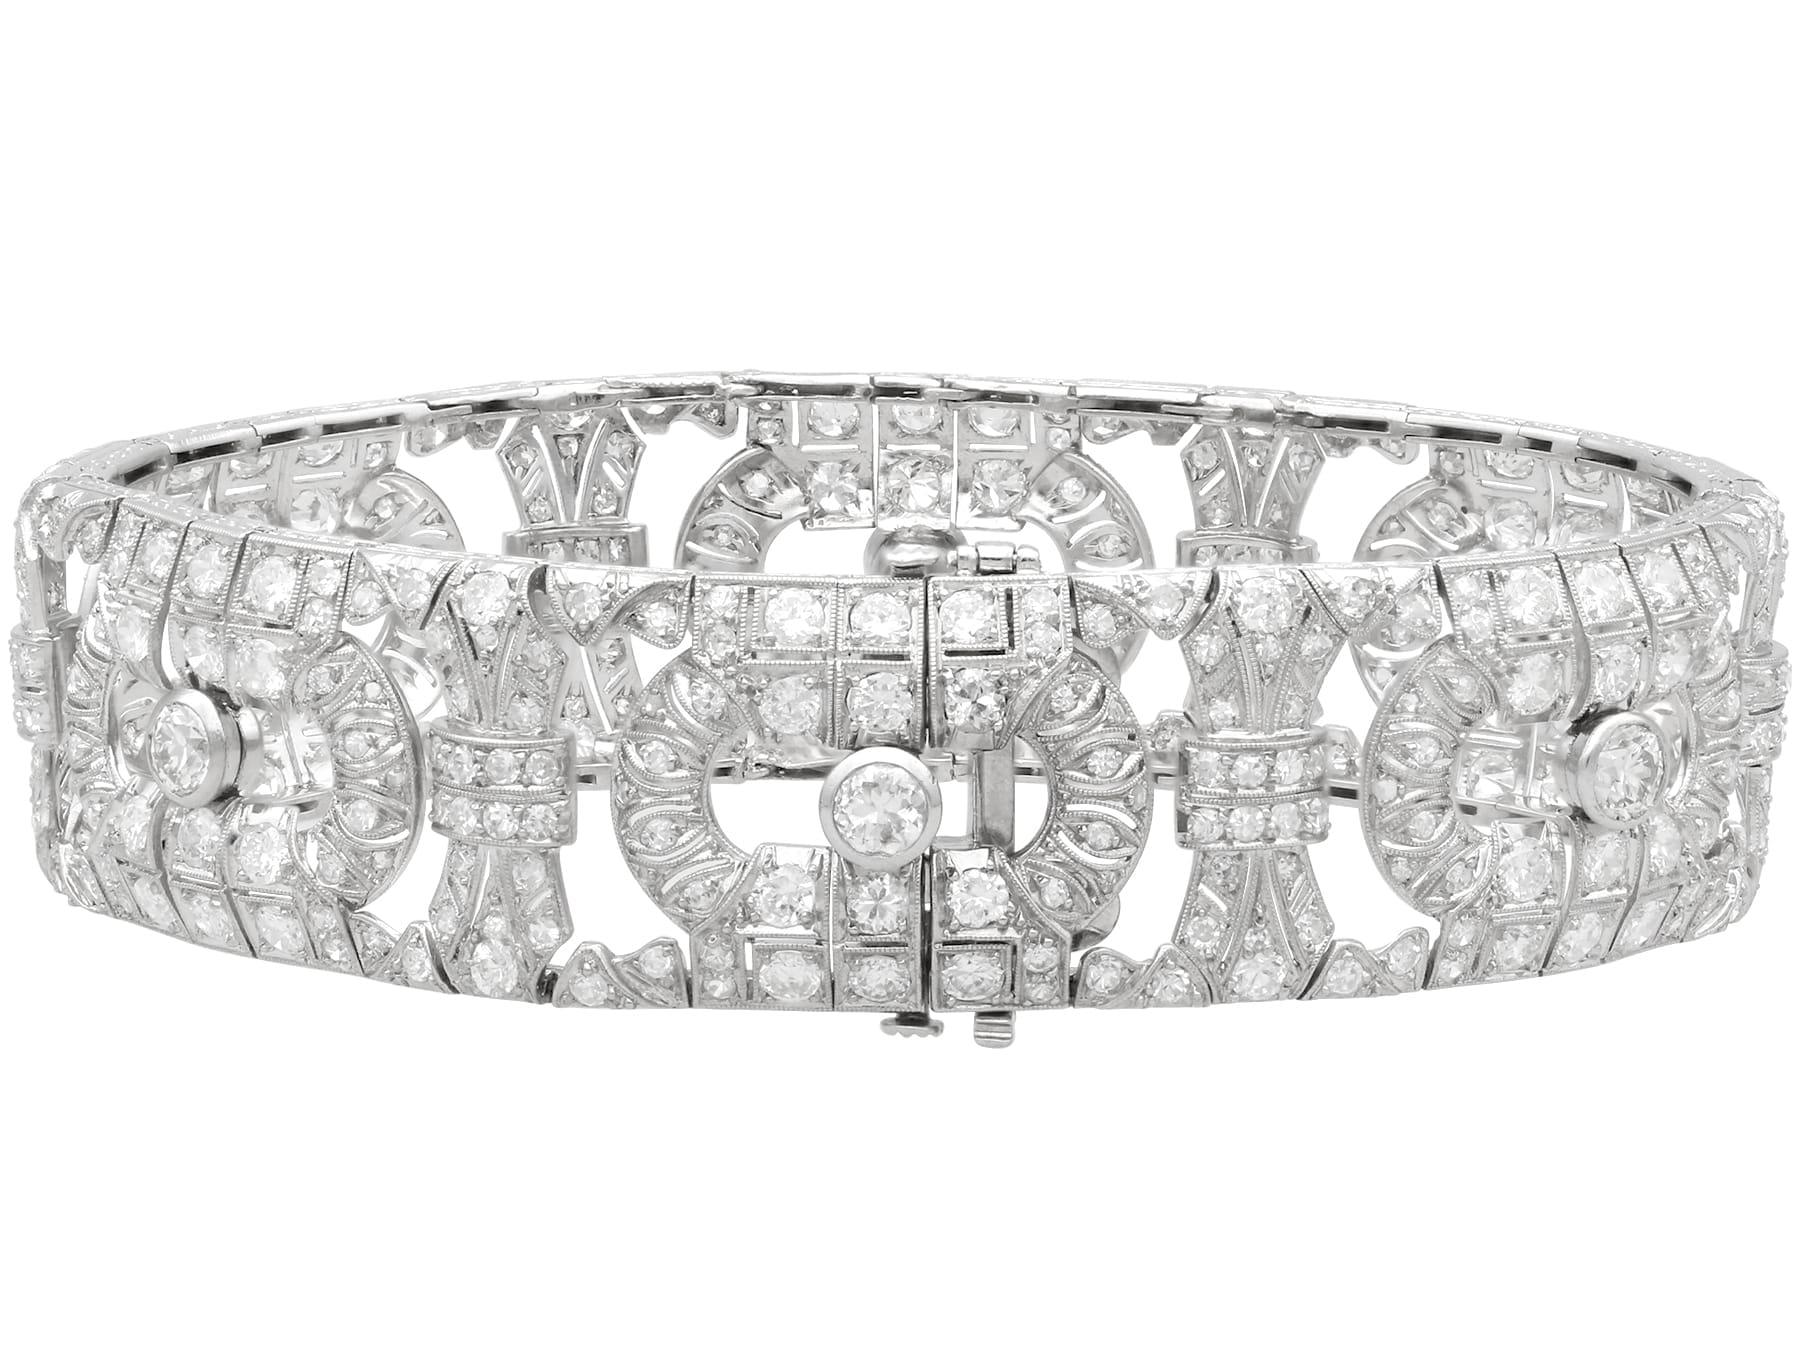 1920s Art Deco 11.32 Carat Diamond and Platinum Bracelet For Sale 3